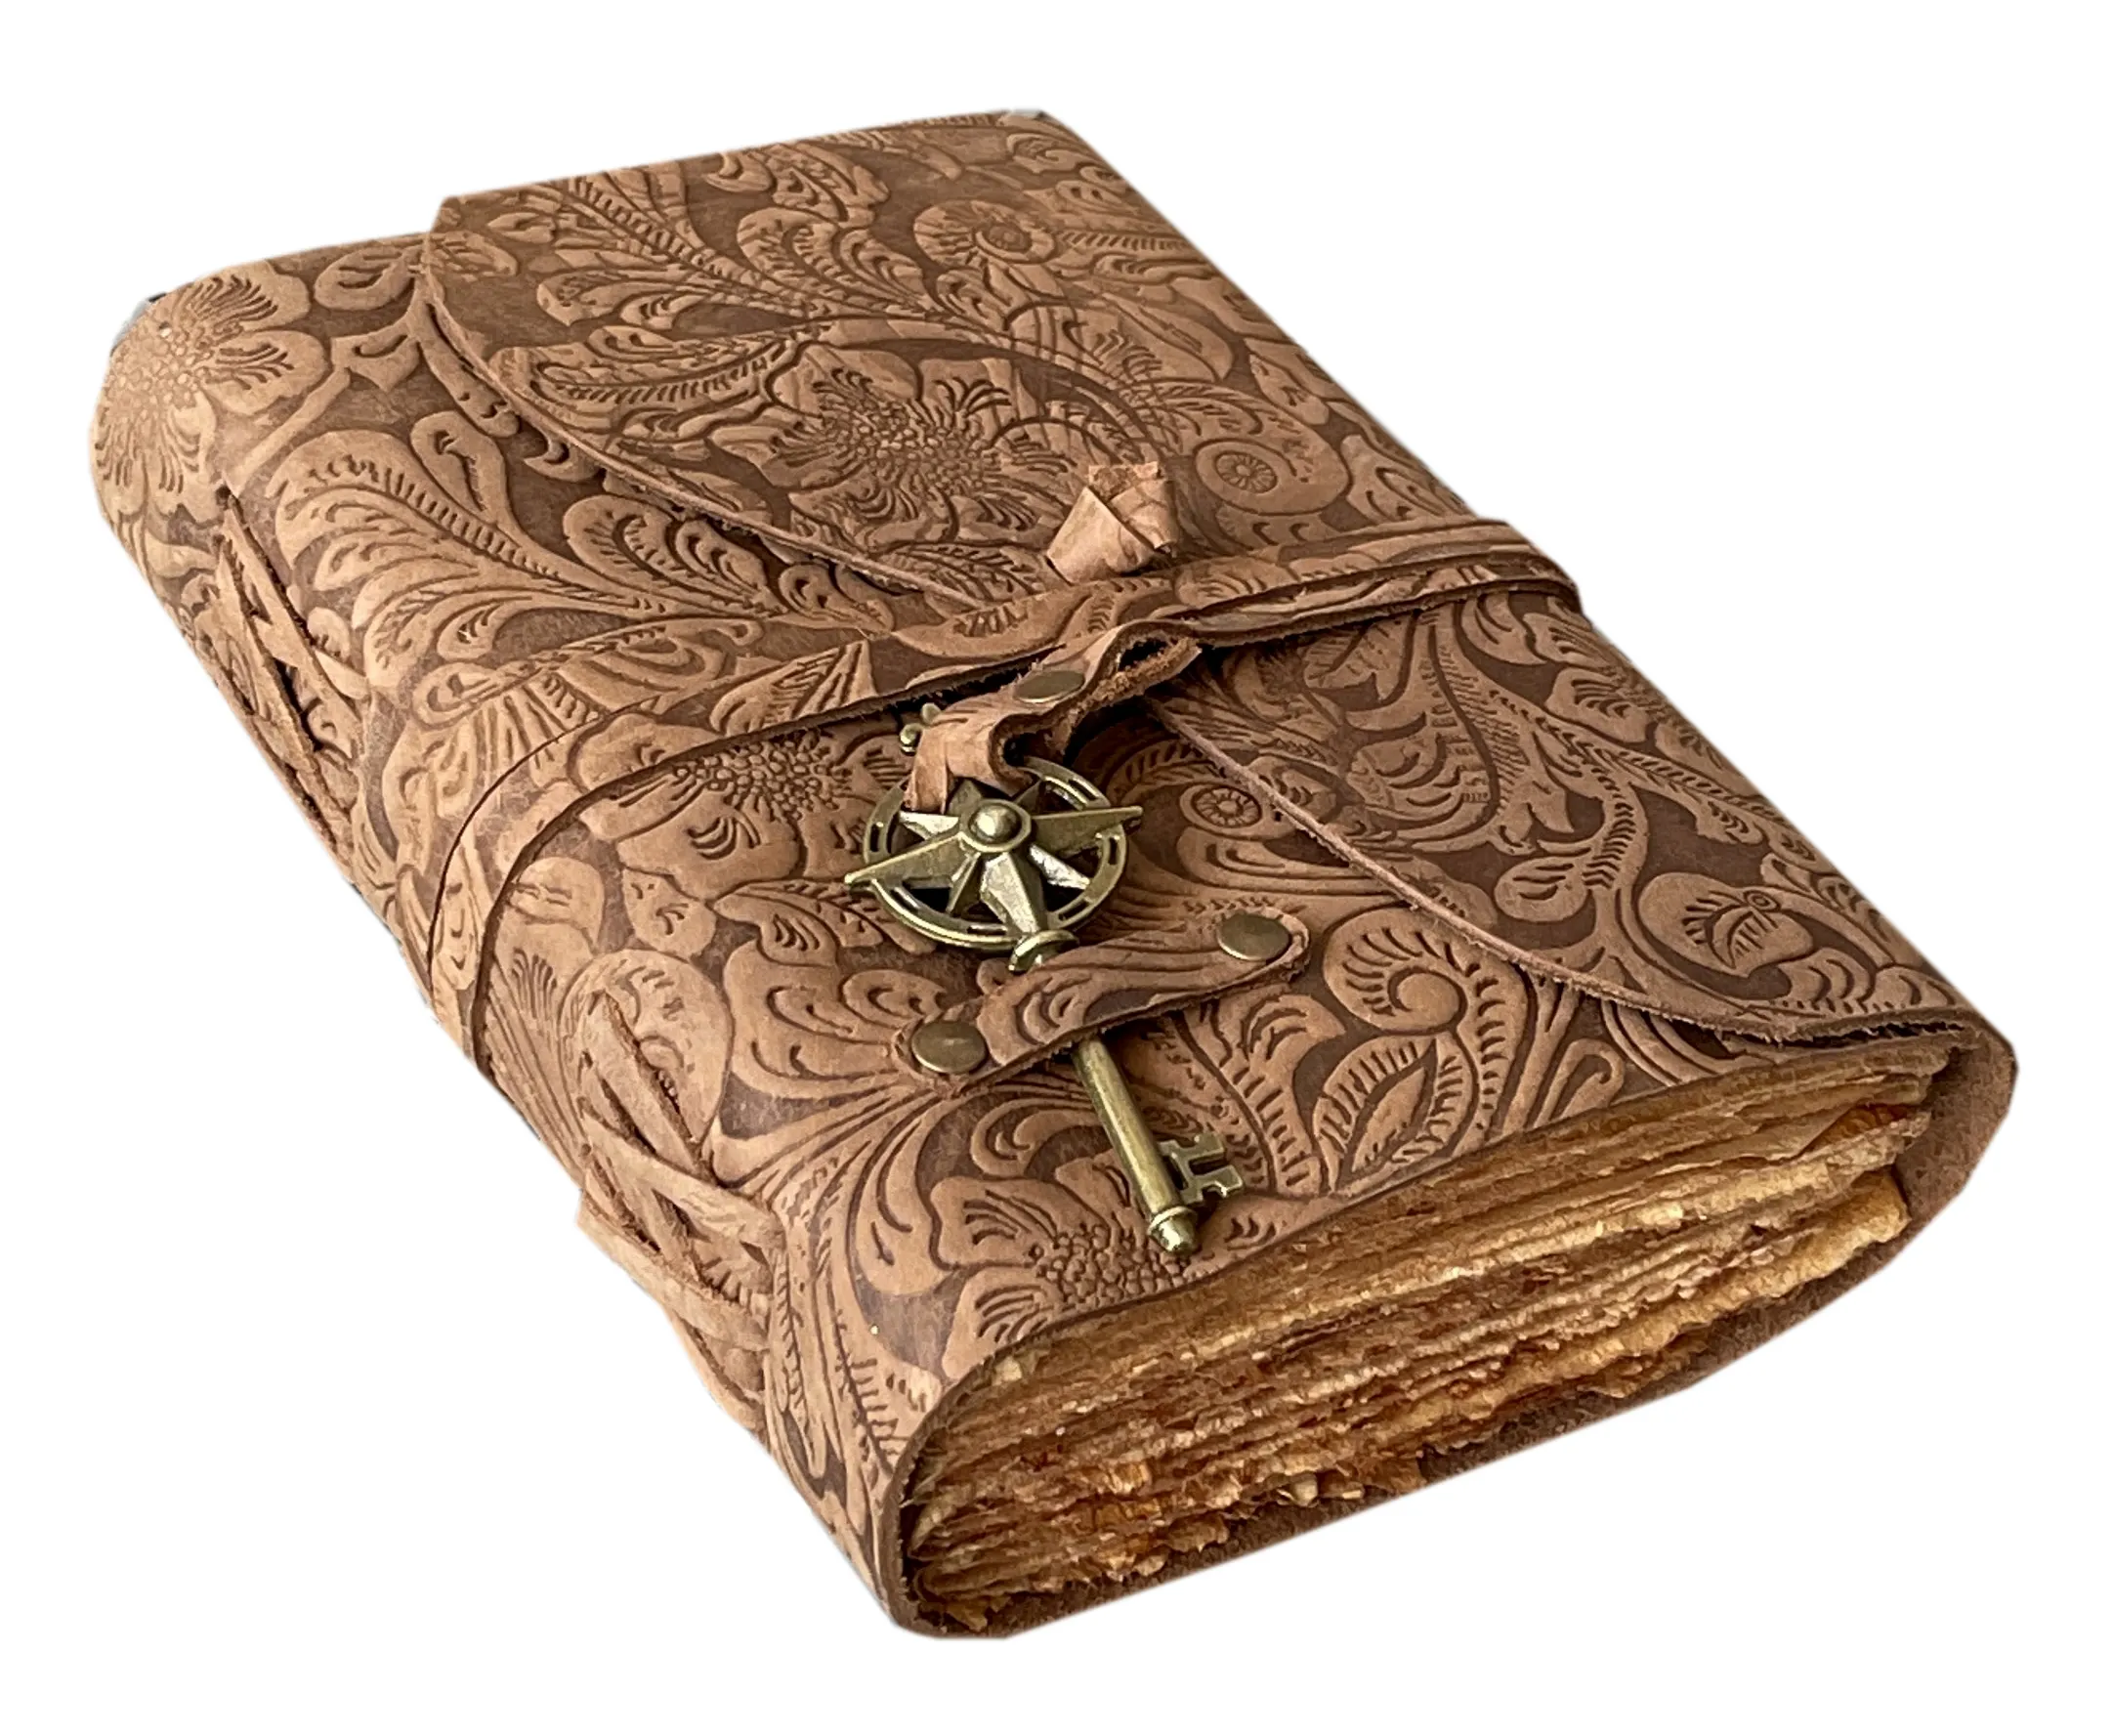 Vintage Leather Bound Journal Antique Garden Flower Notebook Spell Book Of Shadows Grimoire Journal Diary